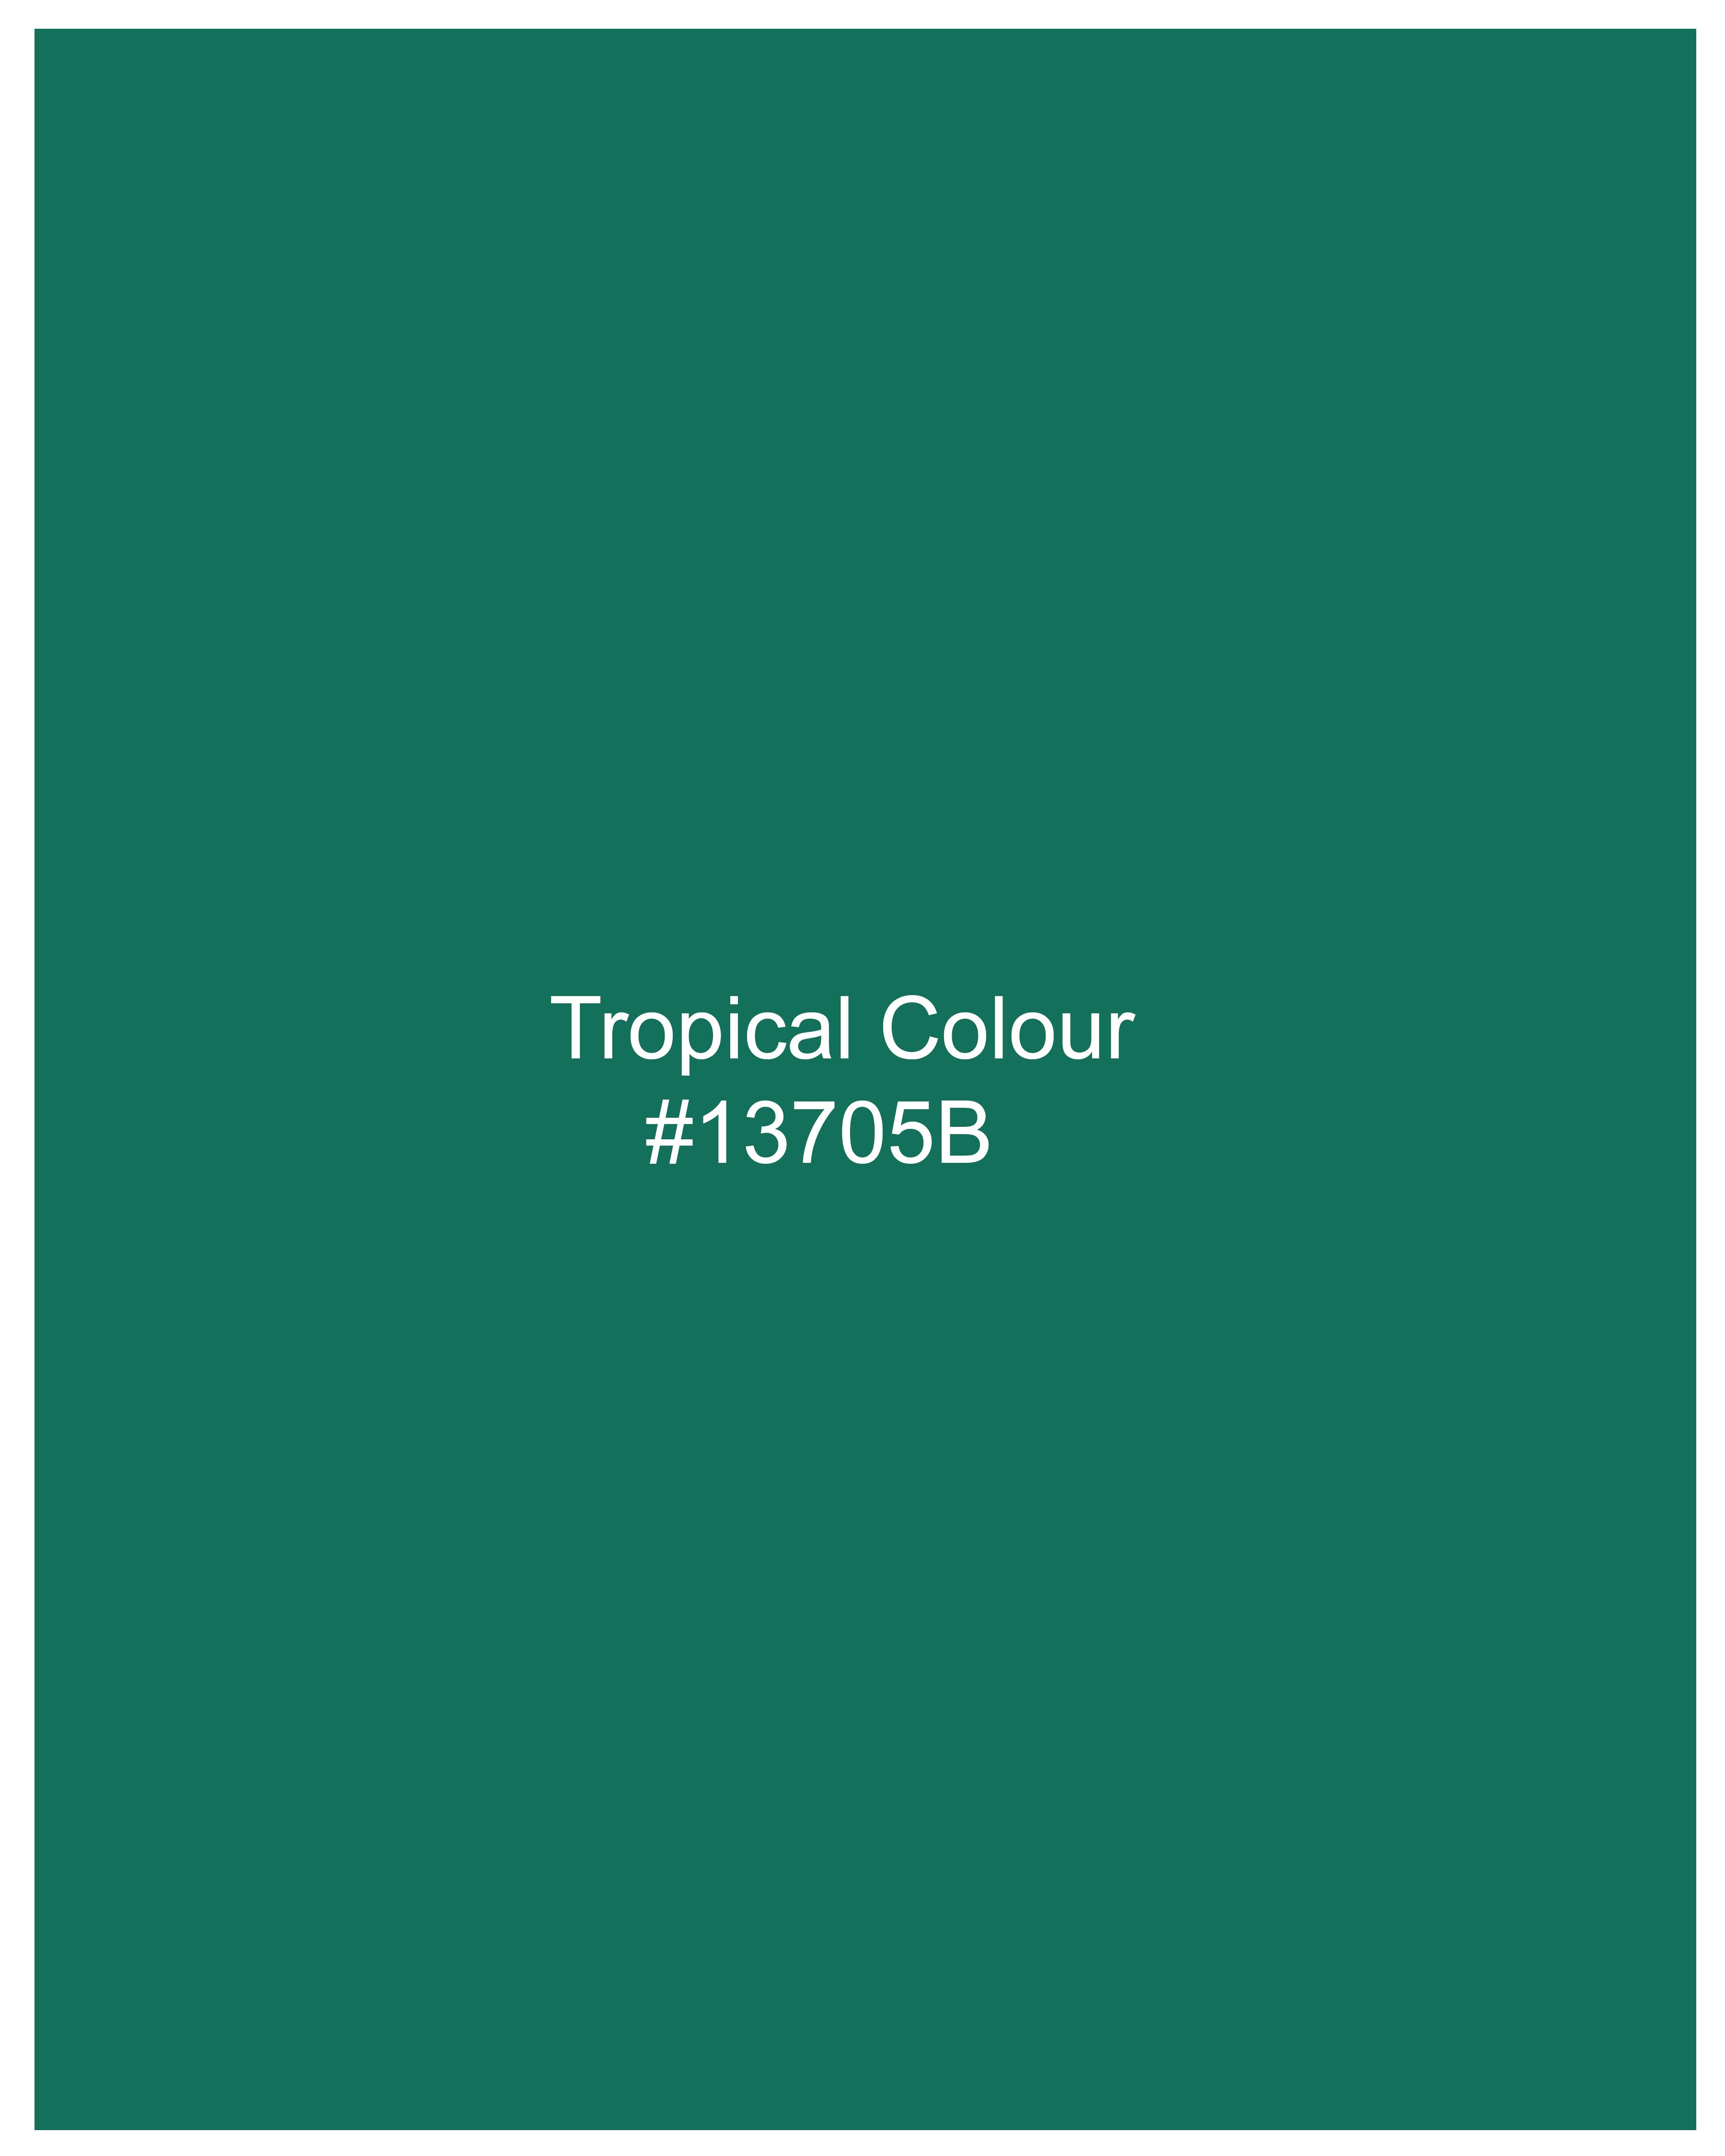 Tropical Green Artistic Hand Painted Organic Designer T-shirt  TS005-W03-S, TS005-W03-M, TS005-W03-L, TS005-W03-XL, TS005-W03-XXL	